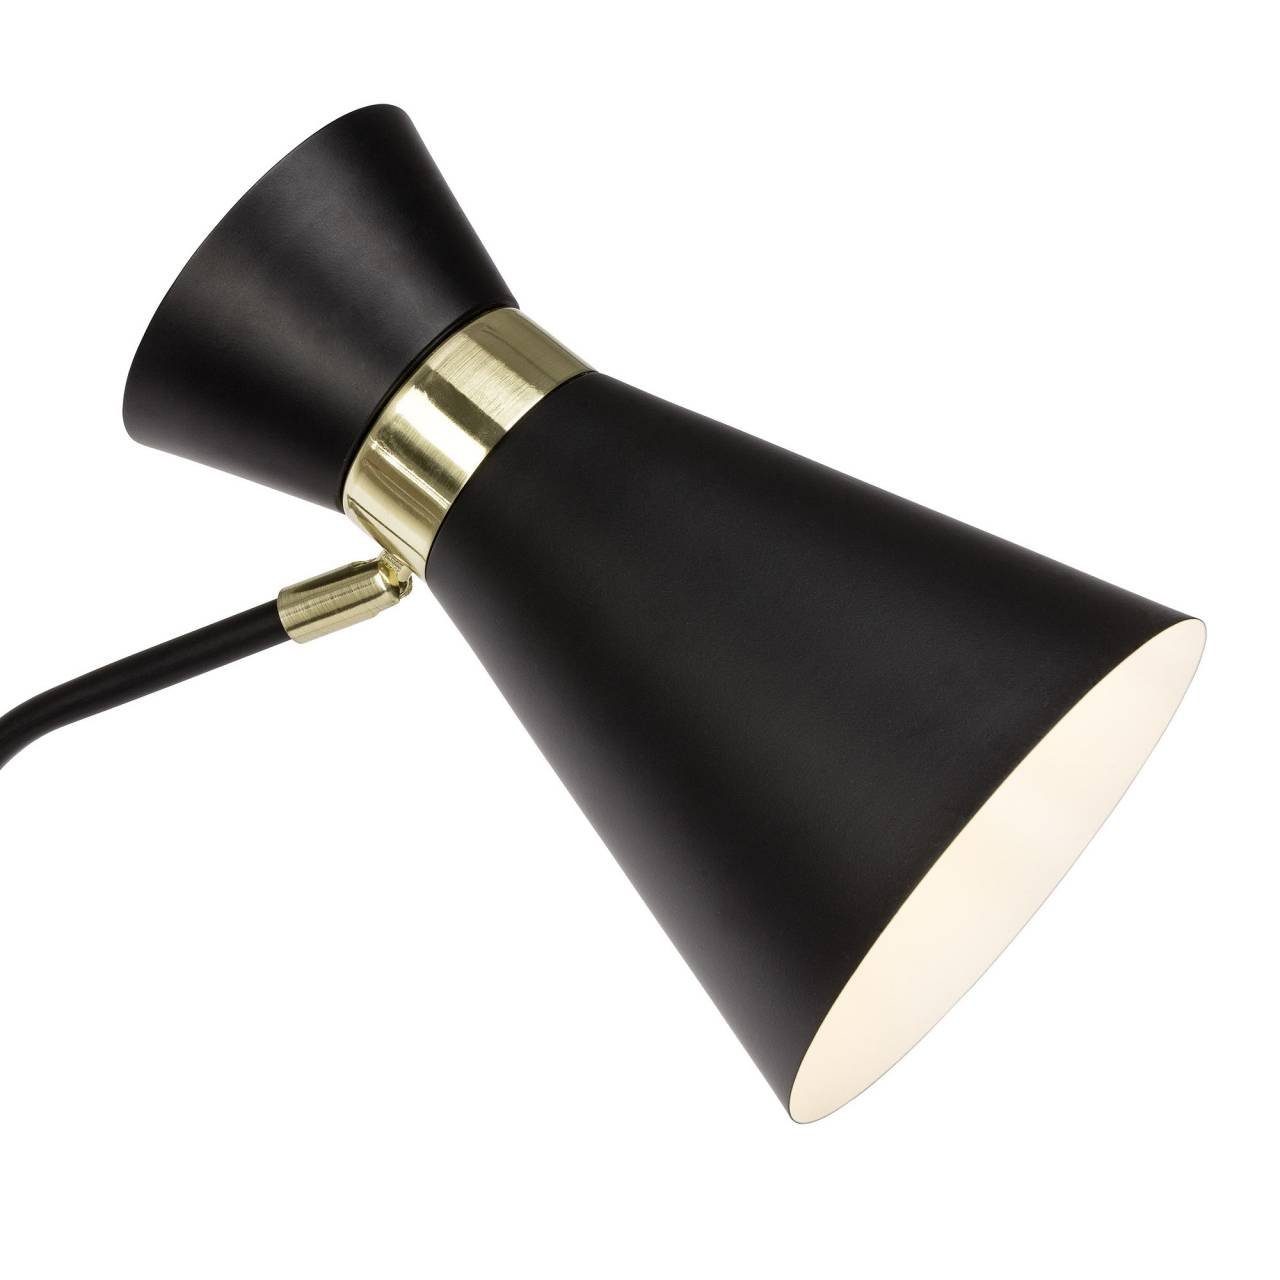 Brilliant Stehlampe Goldy, Lampe Goldy E27, schwarz-matt/gold g. 28W, 1x Standleuchte 1flg A60